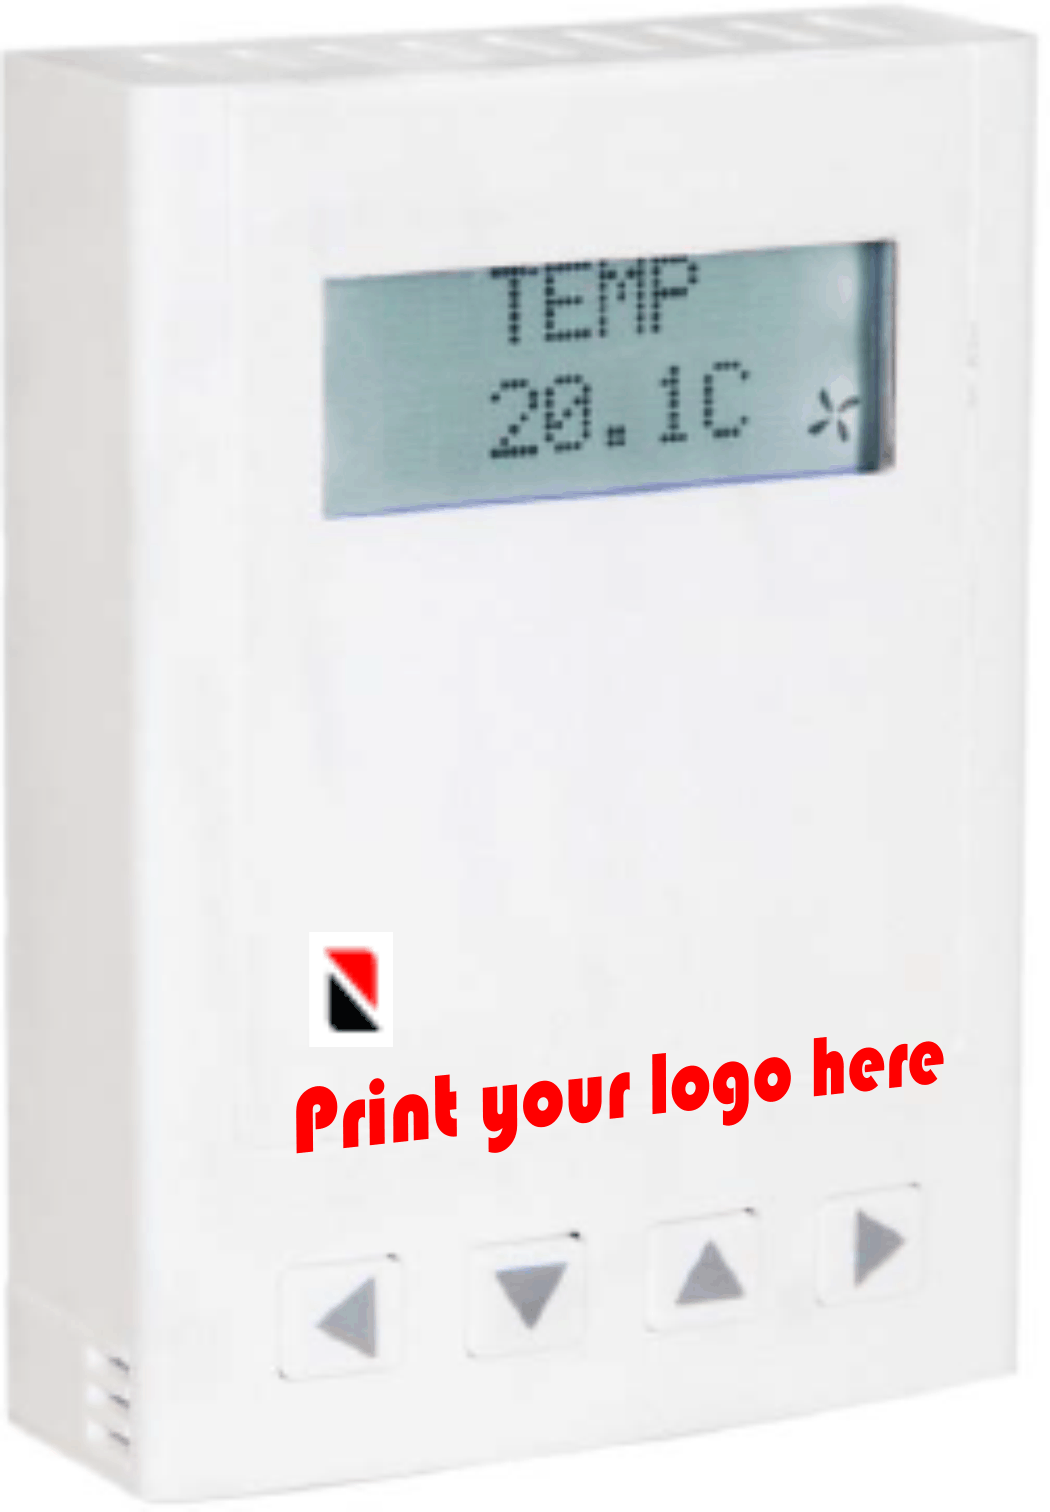 iStat6 intelligent programmable thermostat